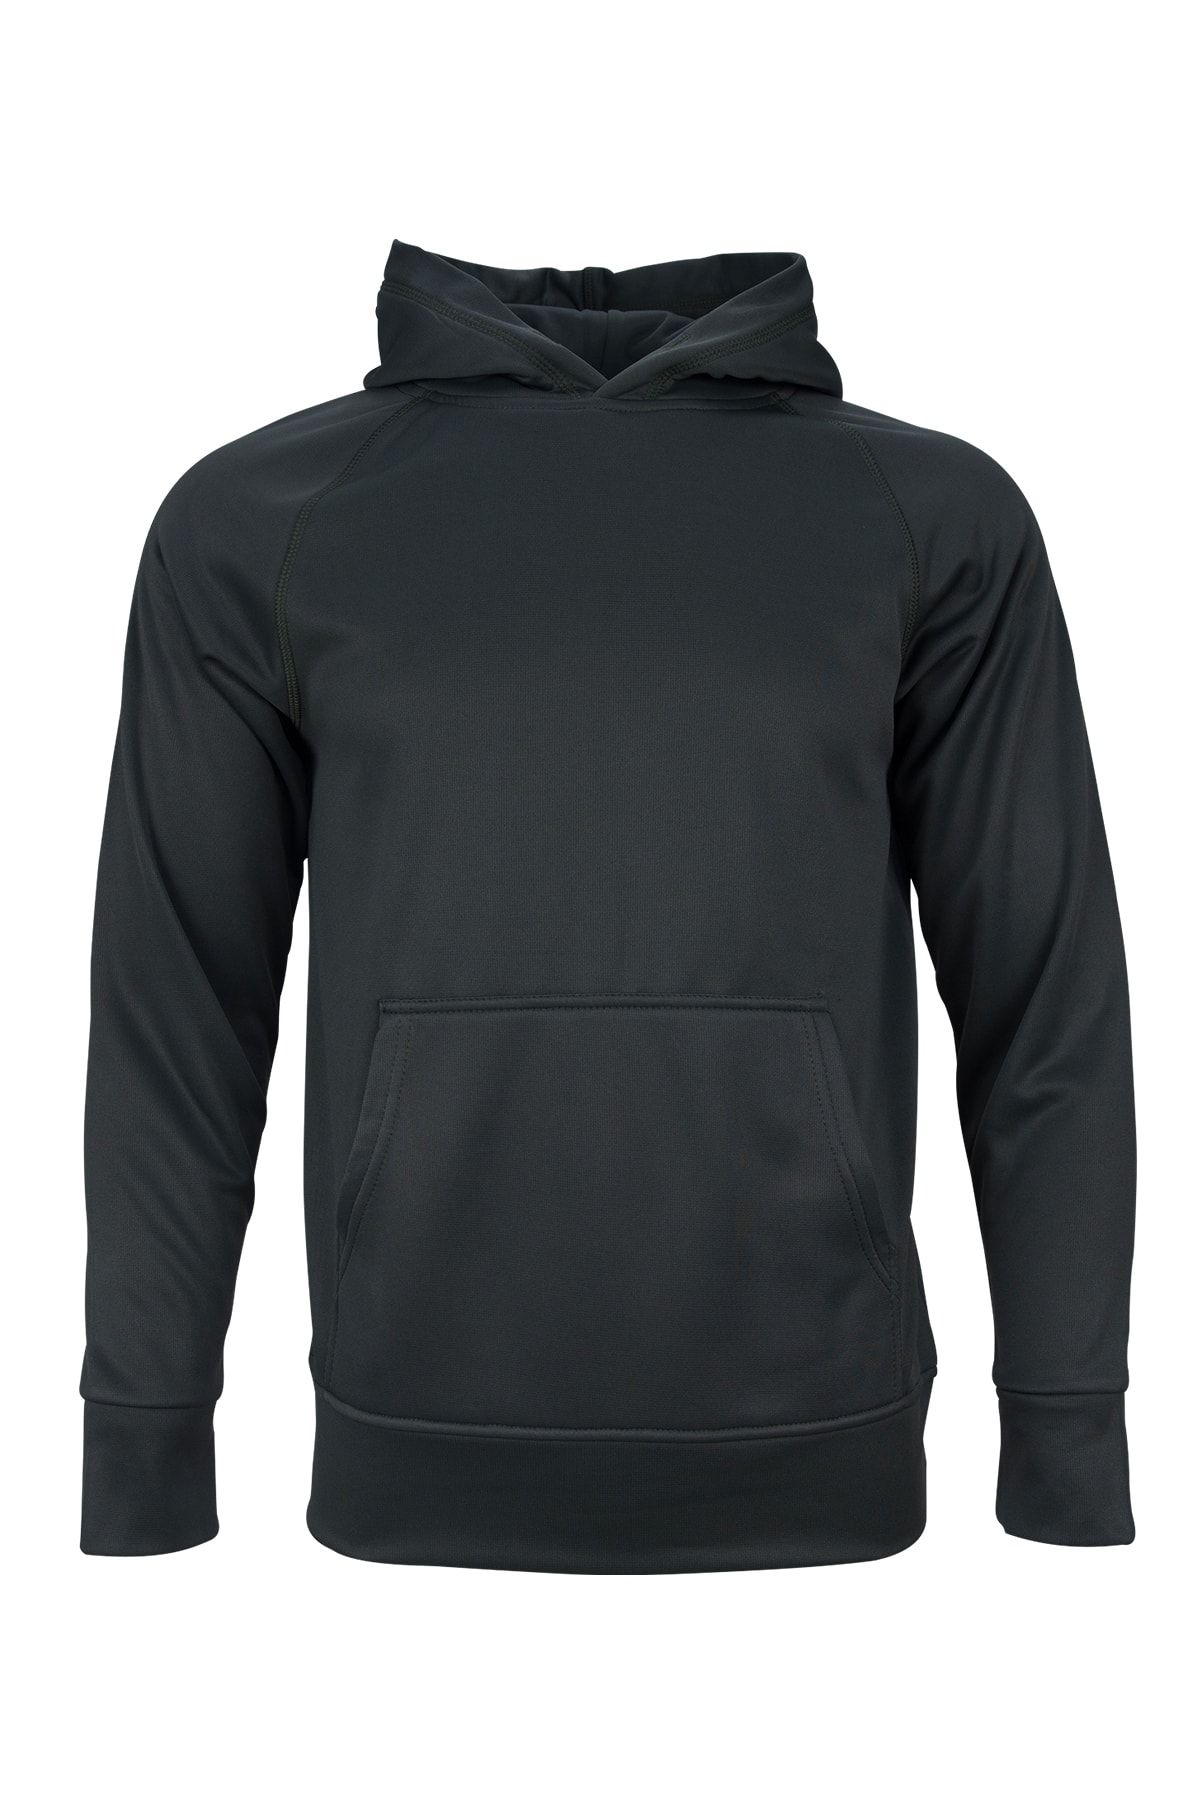 Fimerang Unisex Siyah Basic Fleece Hoodie Spor Sweatshirt